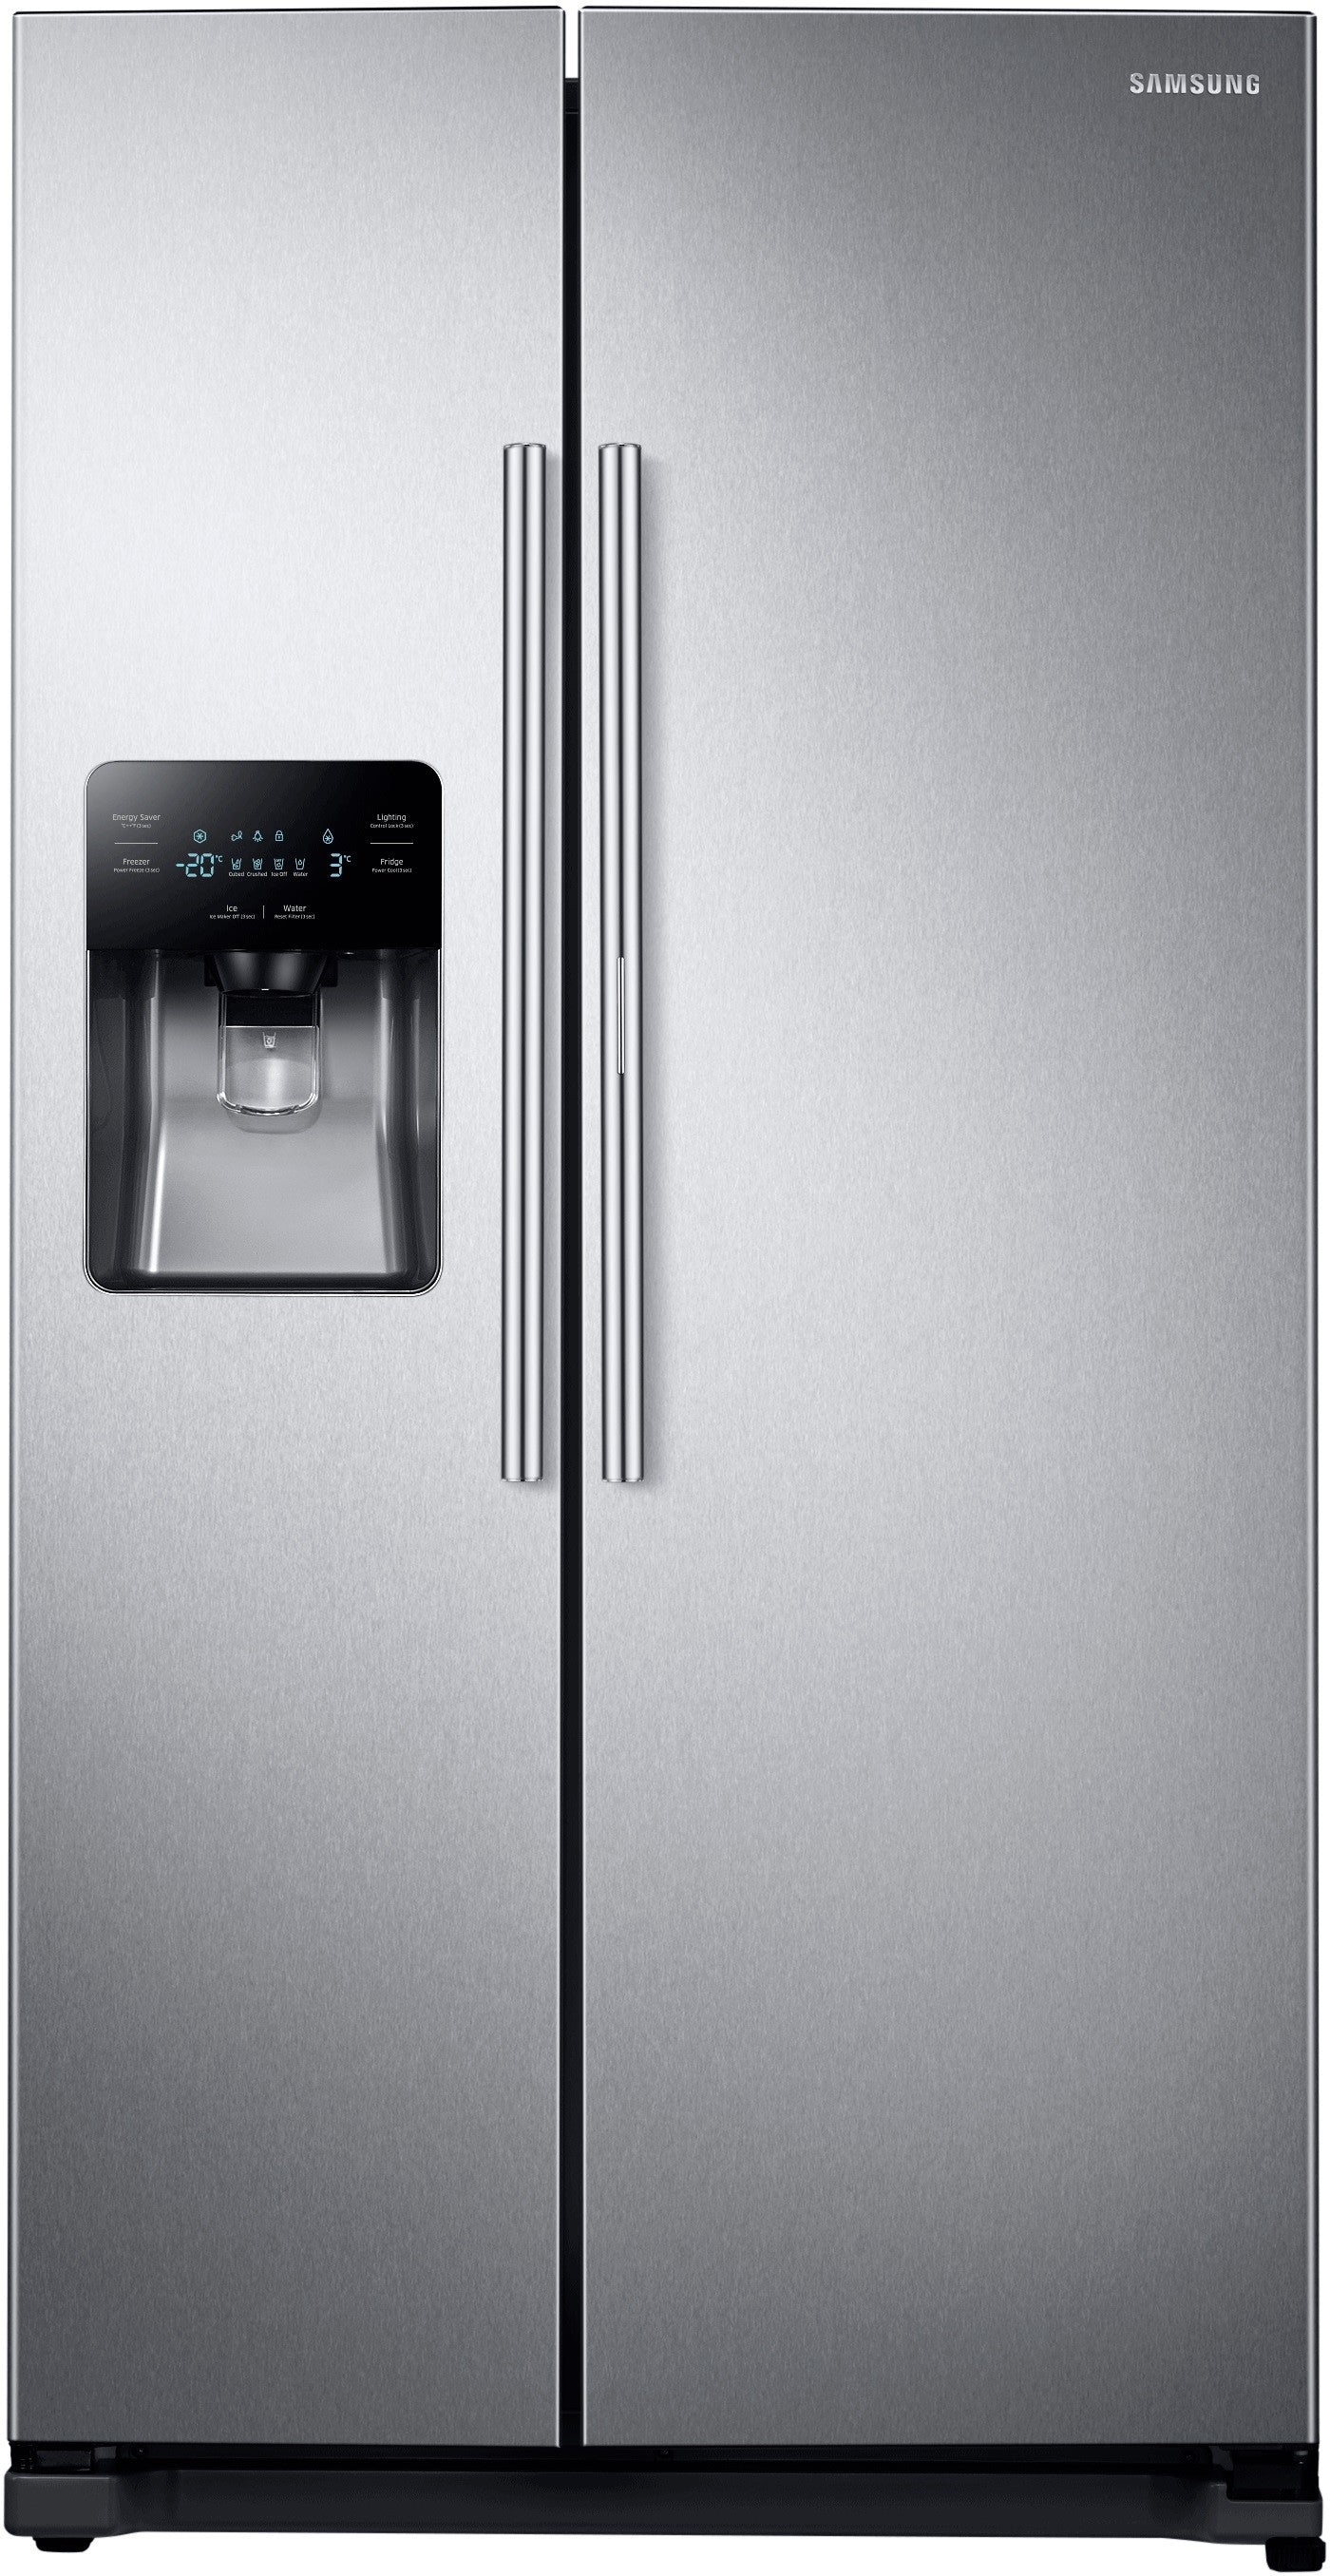 Samsung RH25H5611SR/AA 24.7 Cu. Ft. Side-by-side Refrigerator - Samsung Parts USA